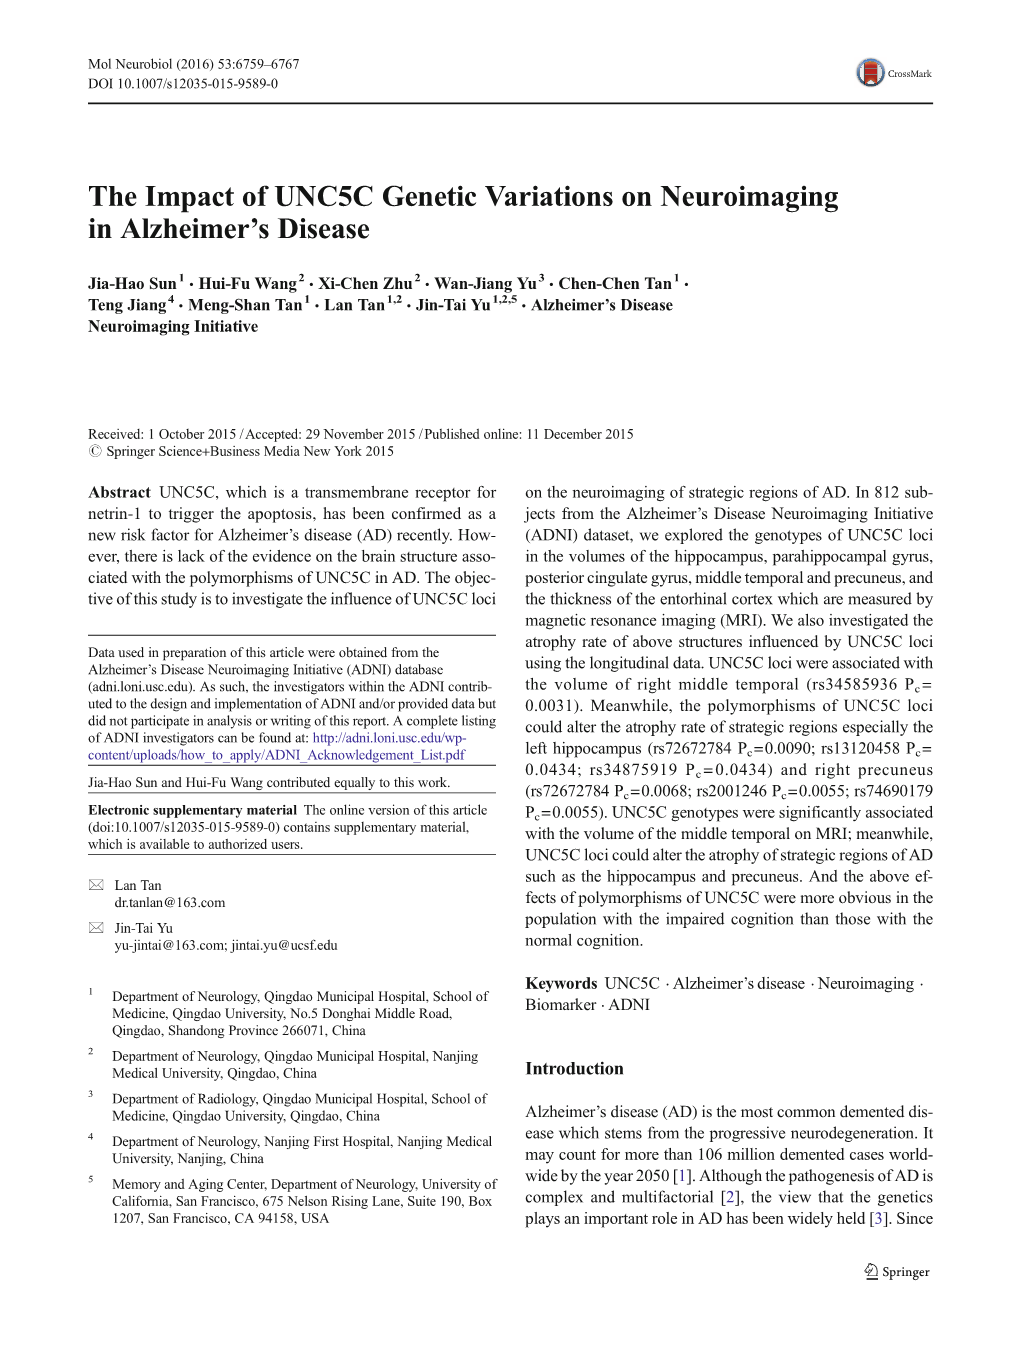 The Impact of UNC5C Genetic Variations on Neuroimaging in Alzheimer’Sdisease